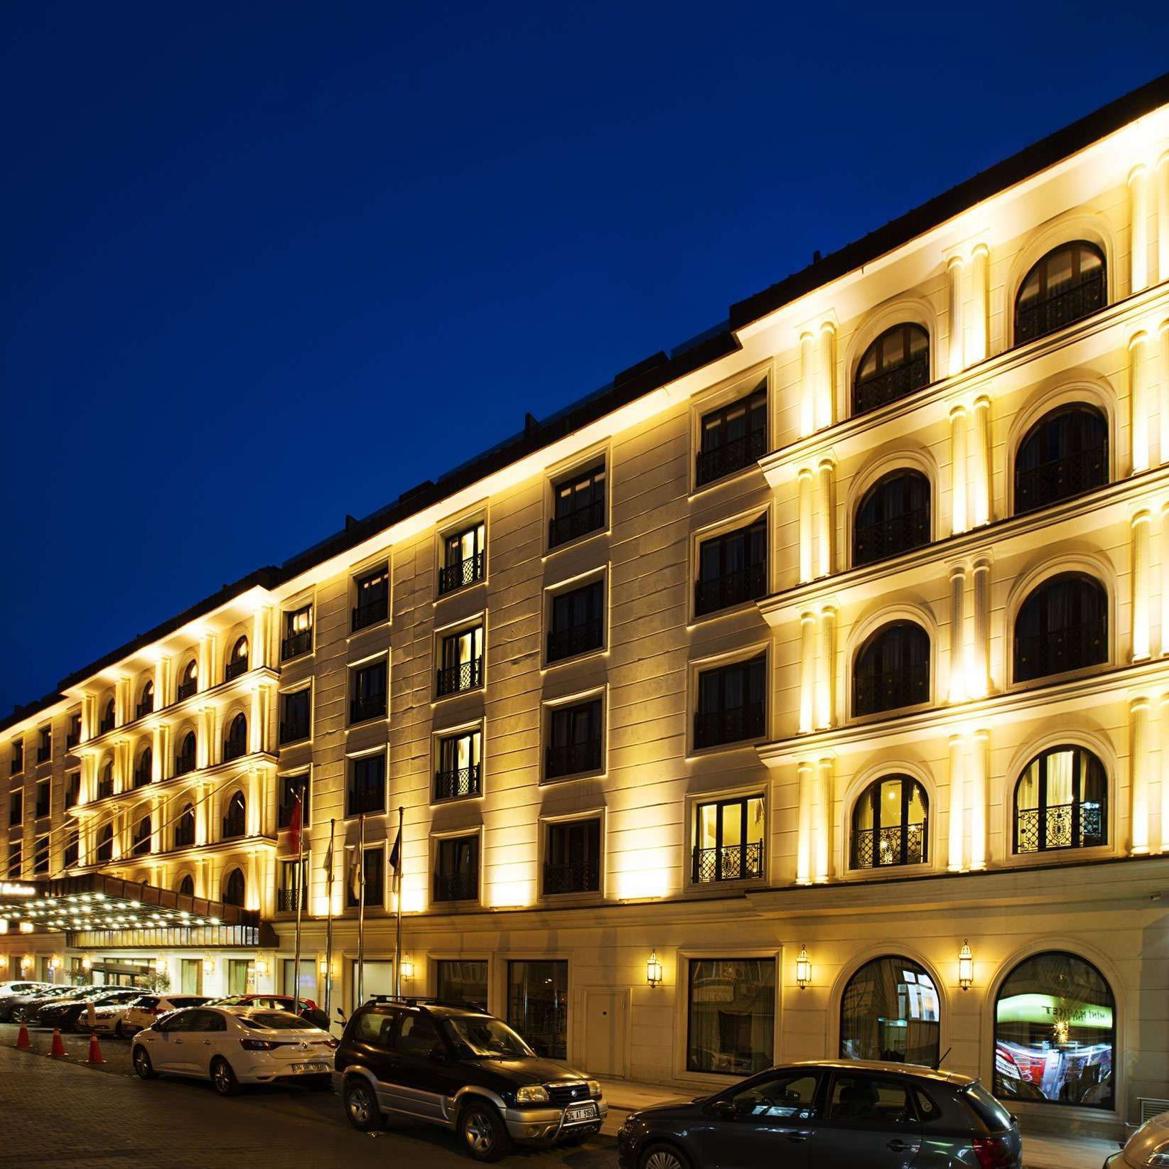 Ottoman's Life Hotel Deluxe midmar deluxe hotel